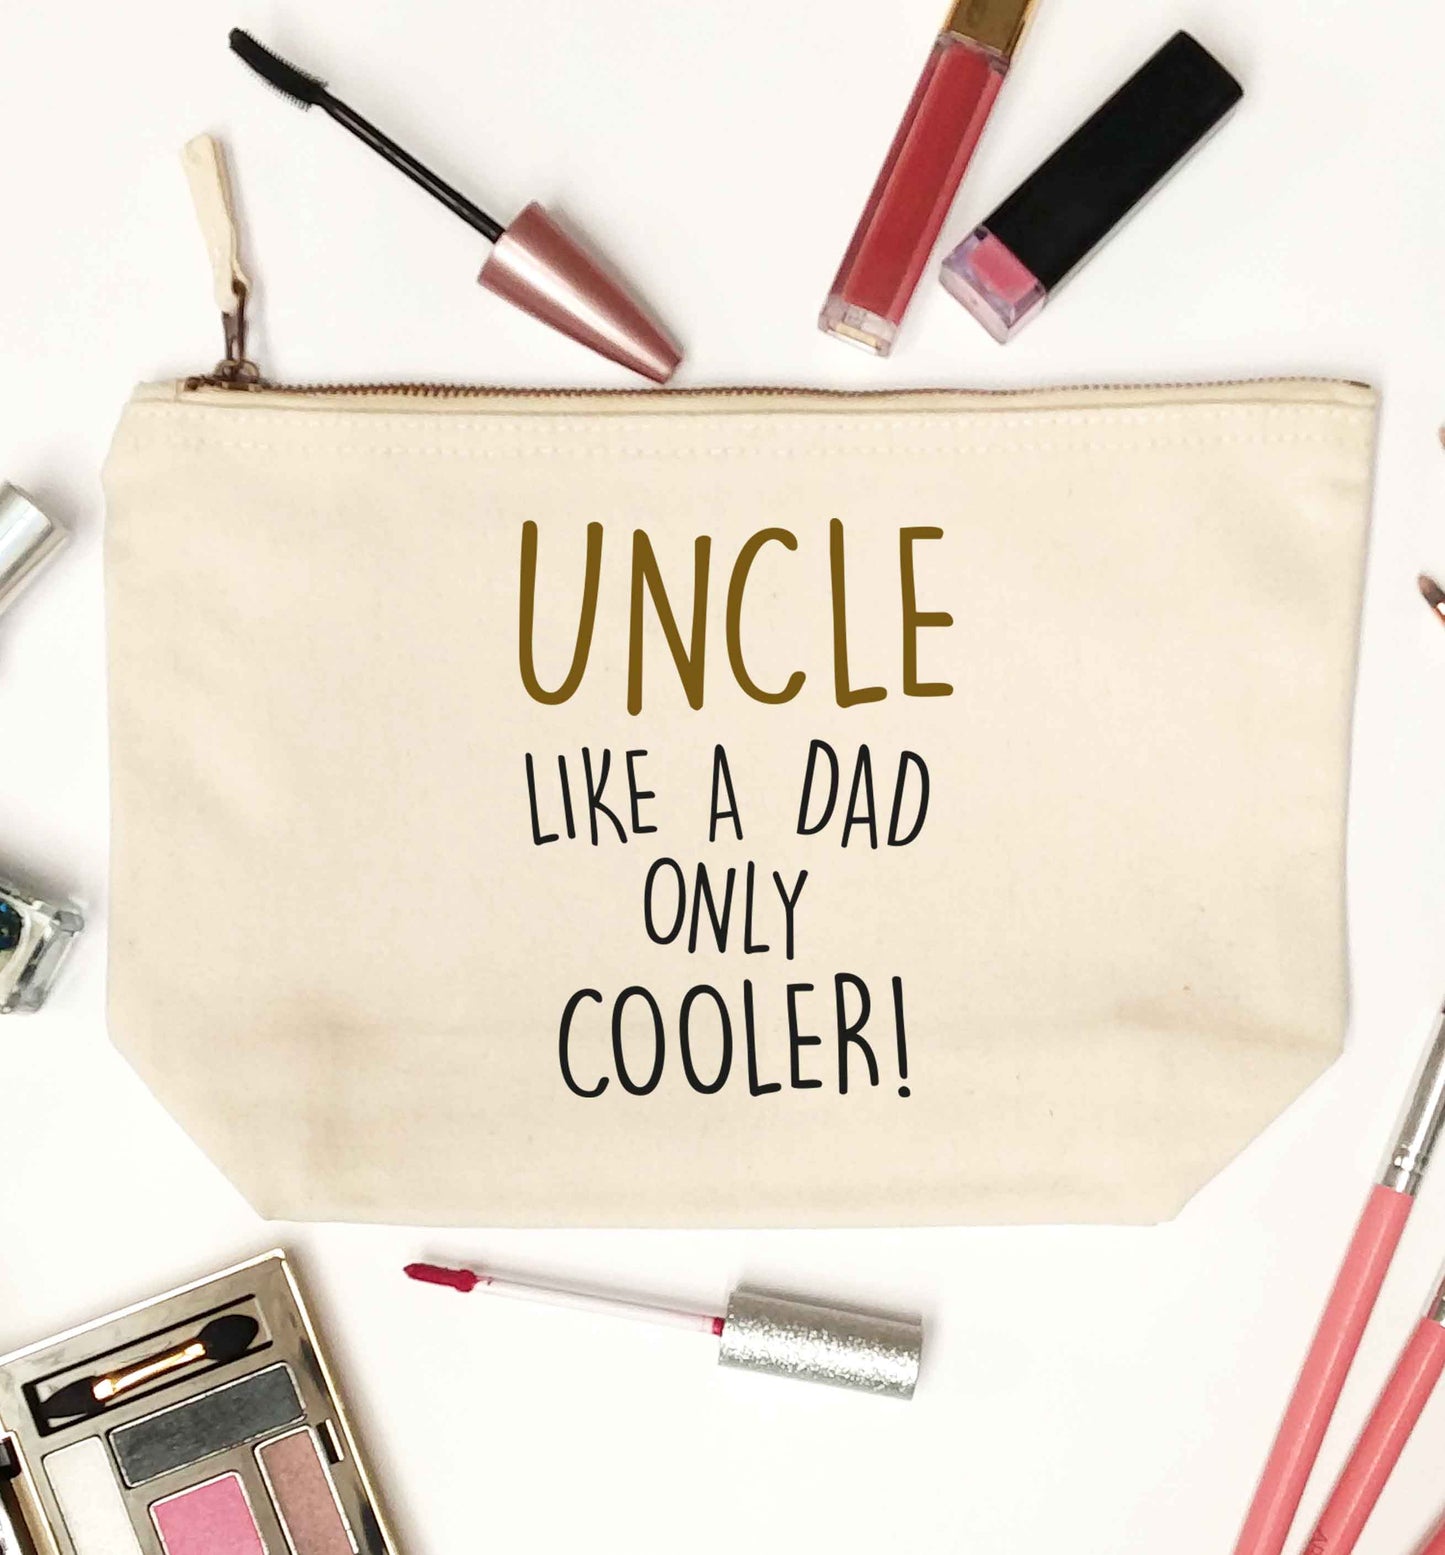 Uncle like a dad only cooler natural makeup bag